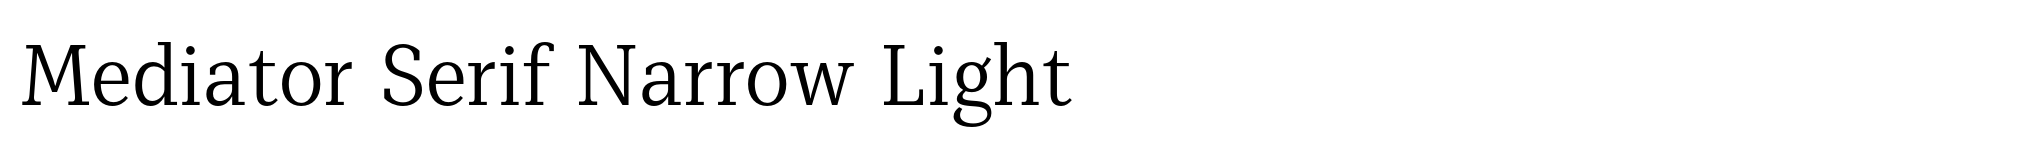 Mediator Serif Narrow Light image